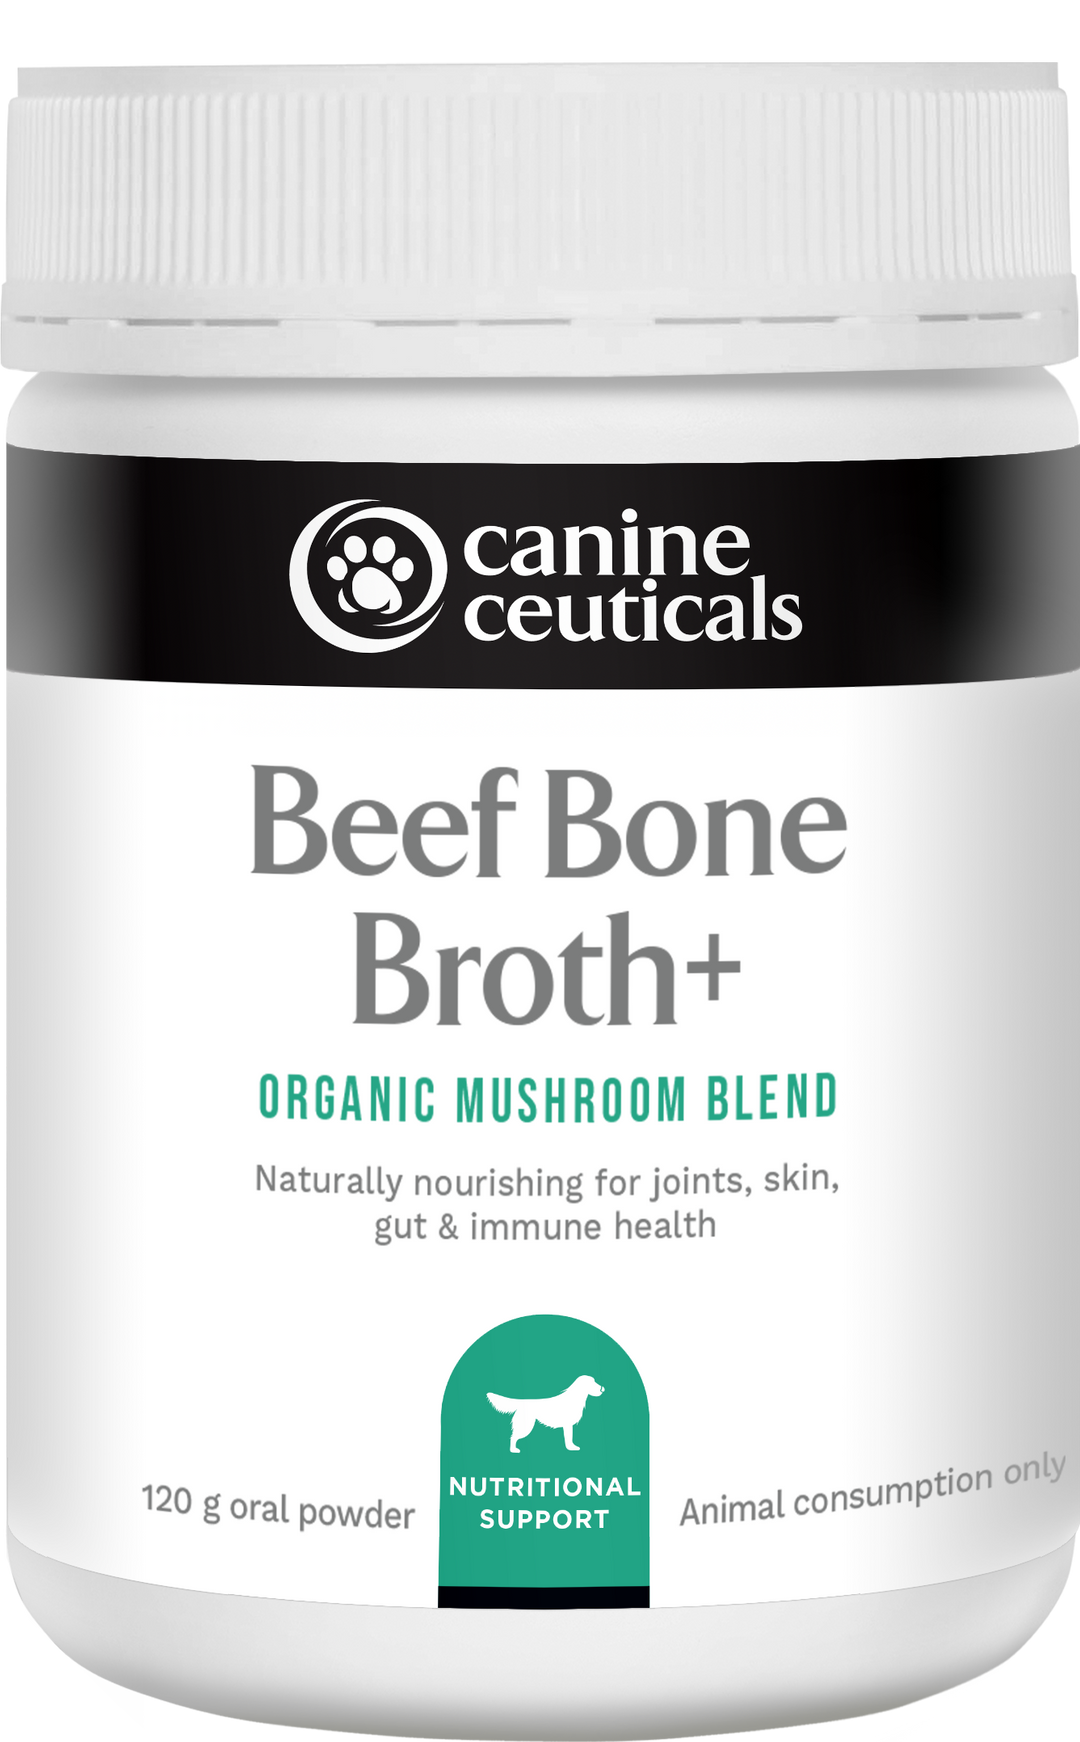 CanineCeuticals BEEF BONE BROTH+